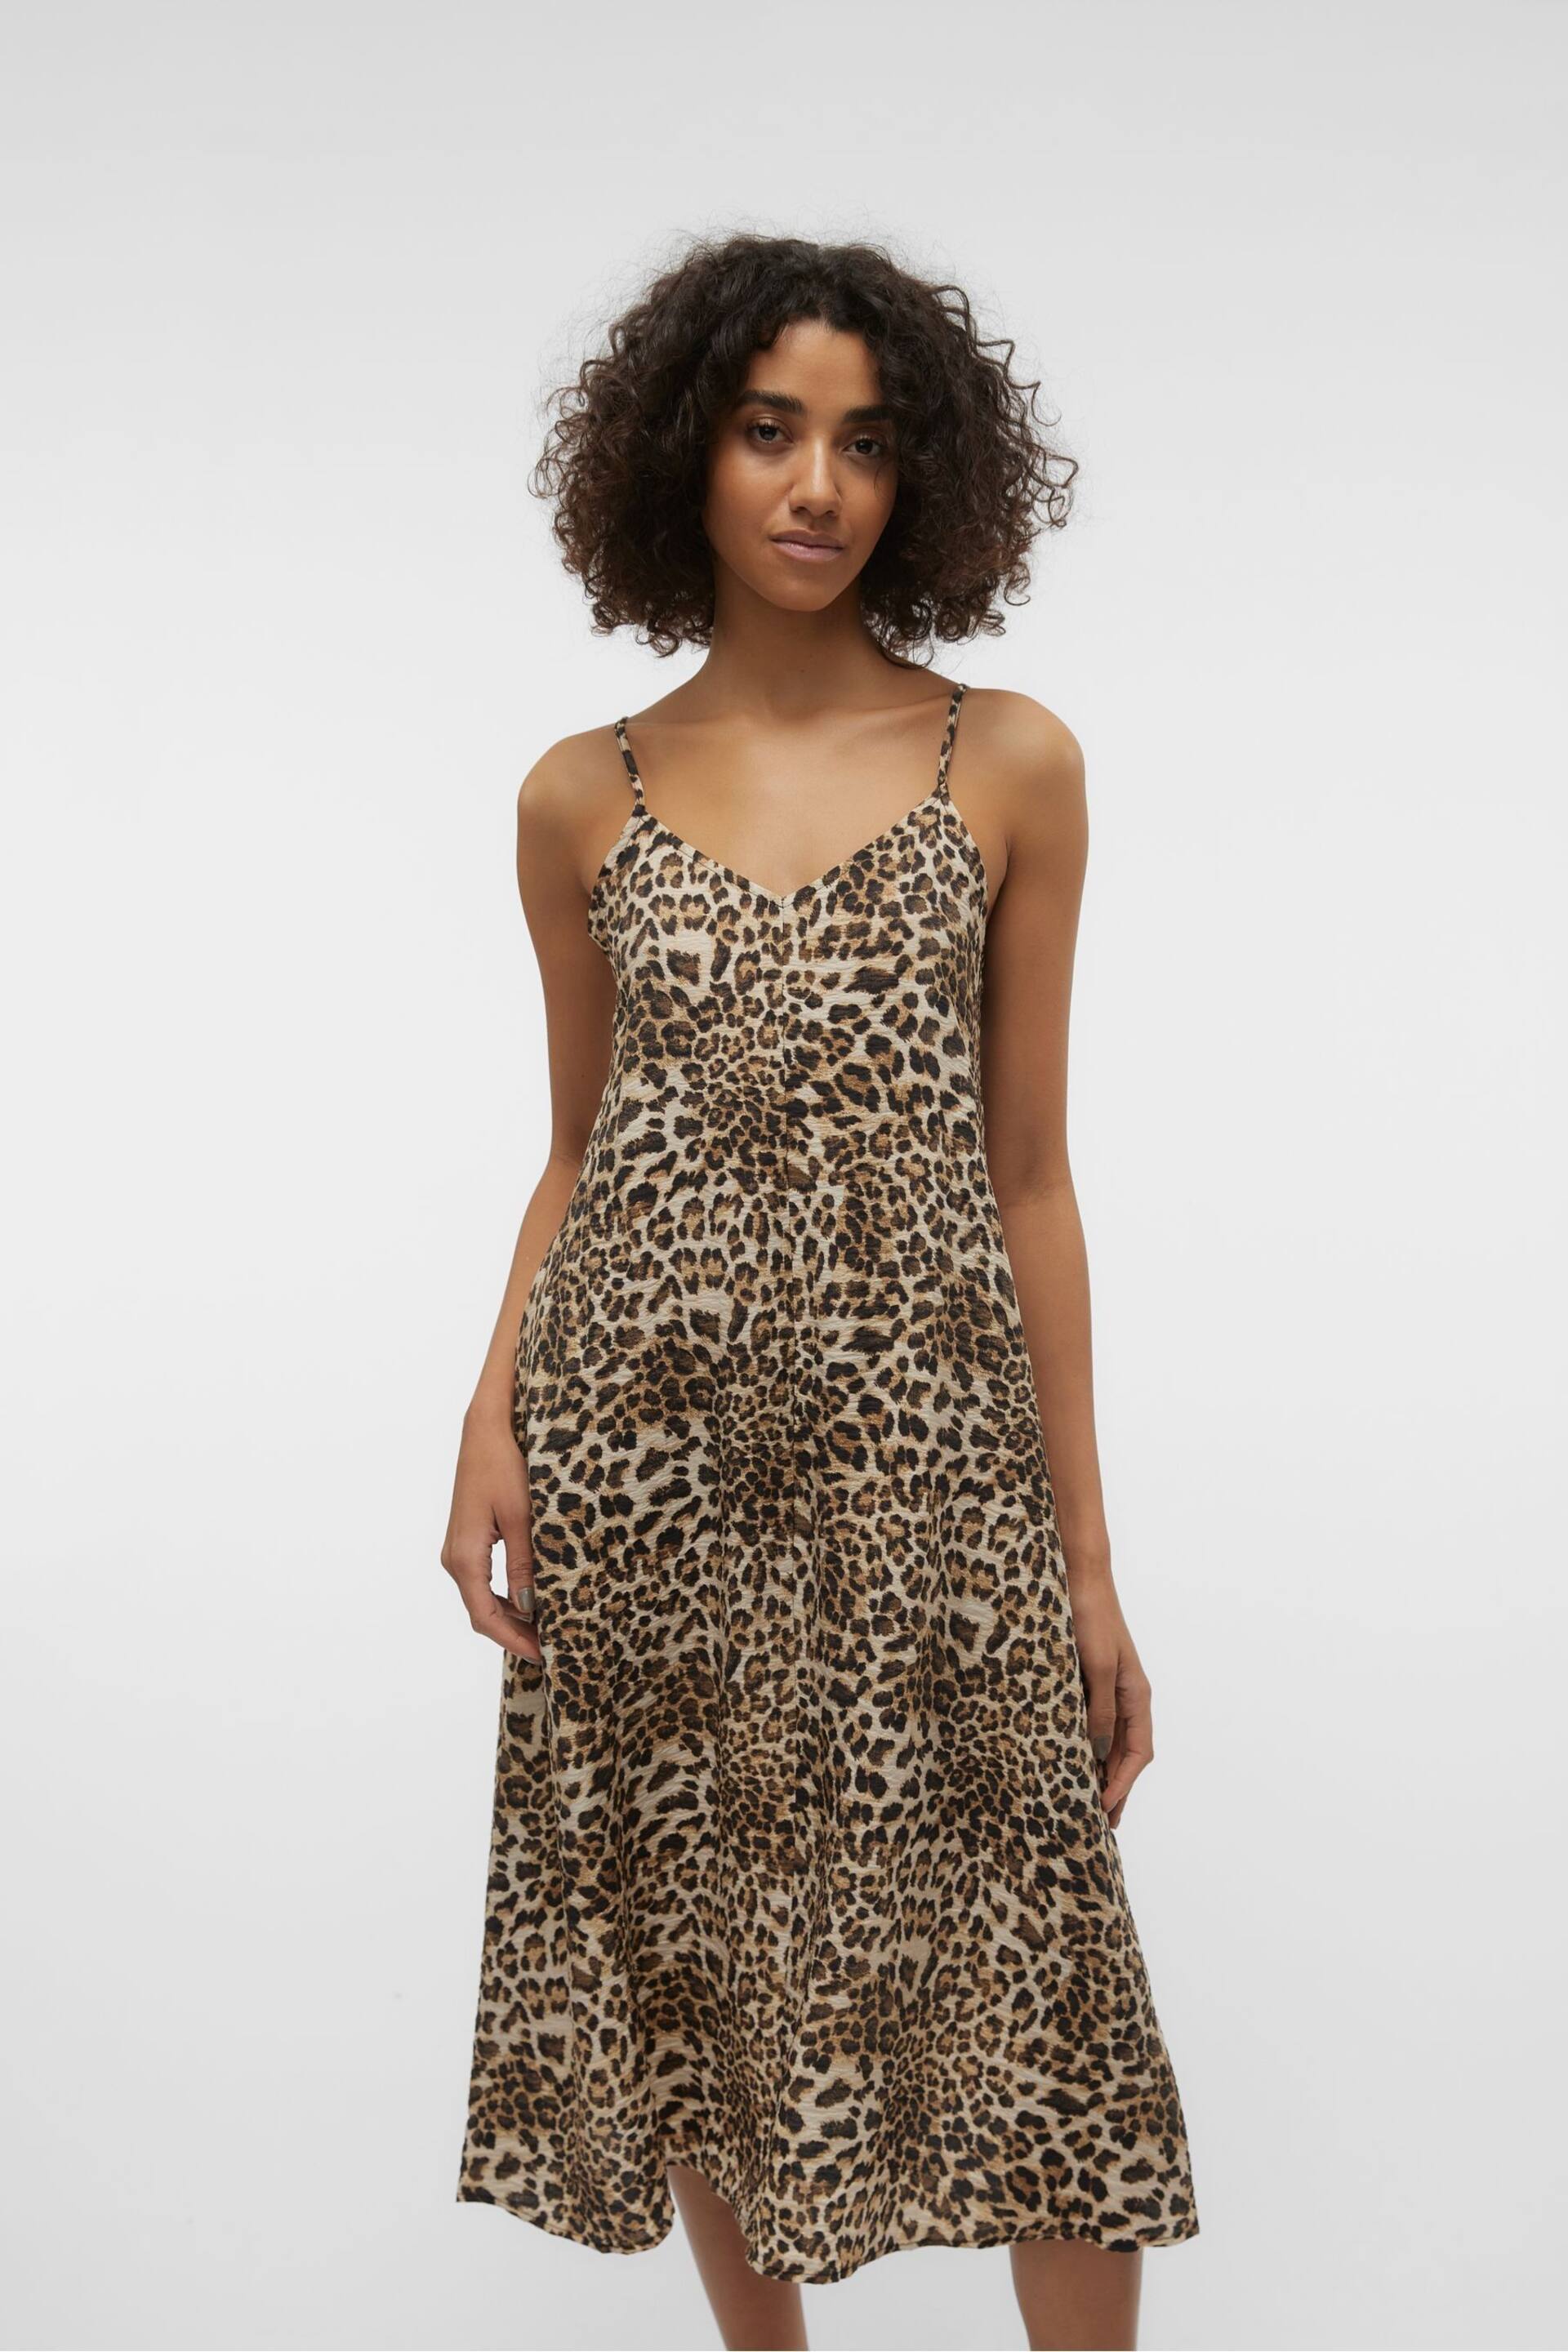 VERO MODA Brown Leopard Print Midi Cami Summer Dress - Image 5 of 7